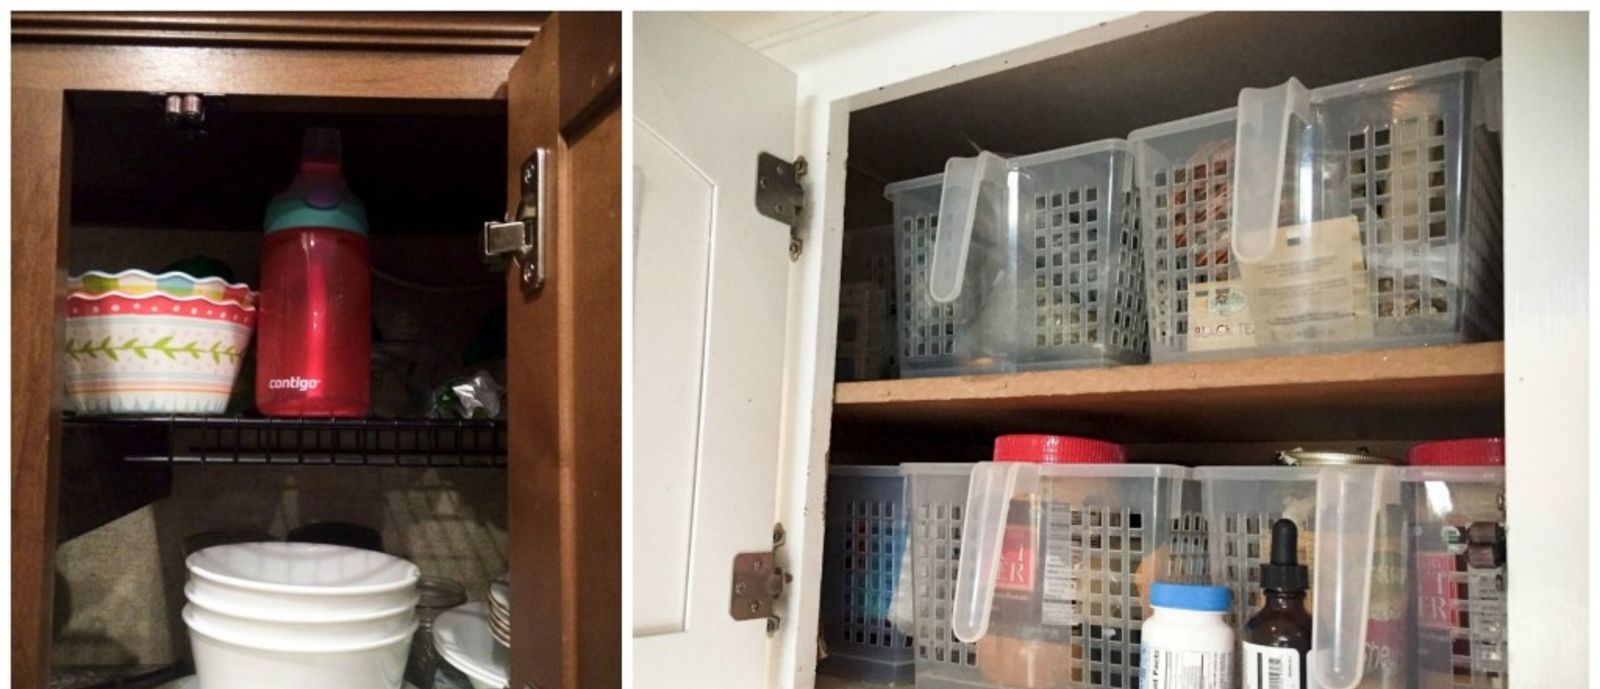 RV Kitchen Storage - Think Outside the Box